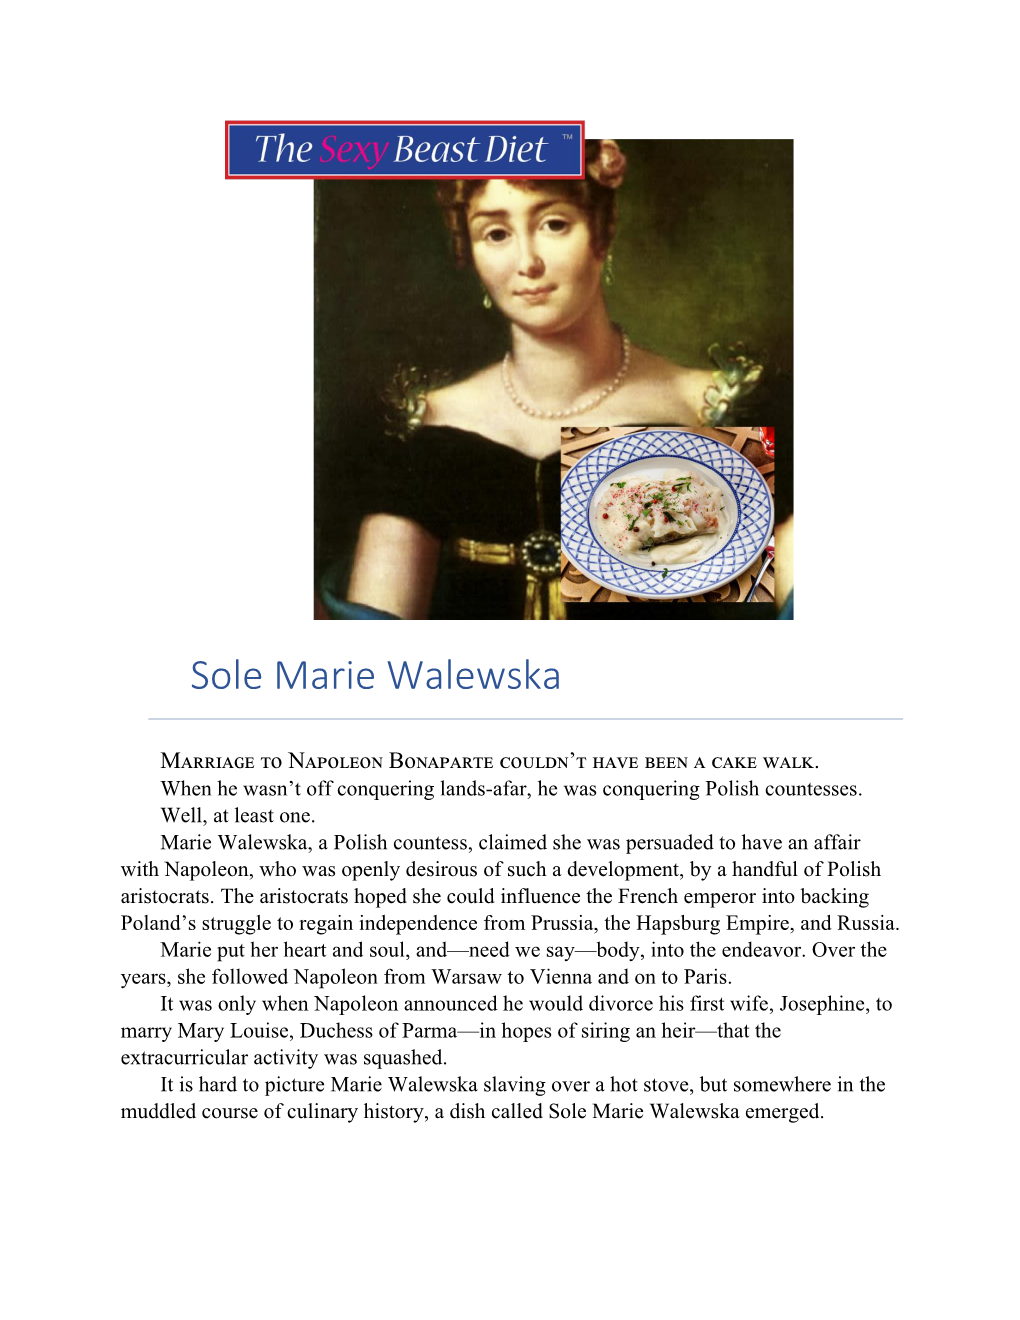 Sole Marie Walewska